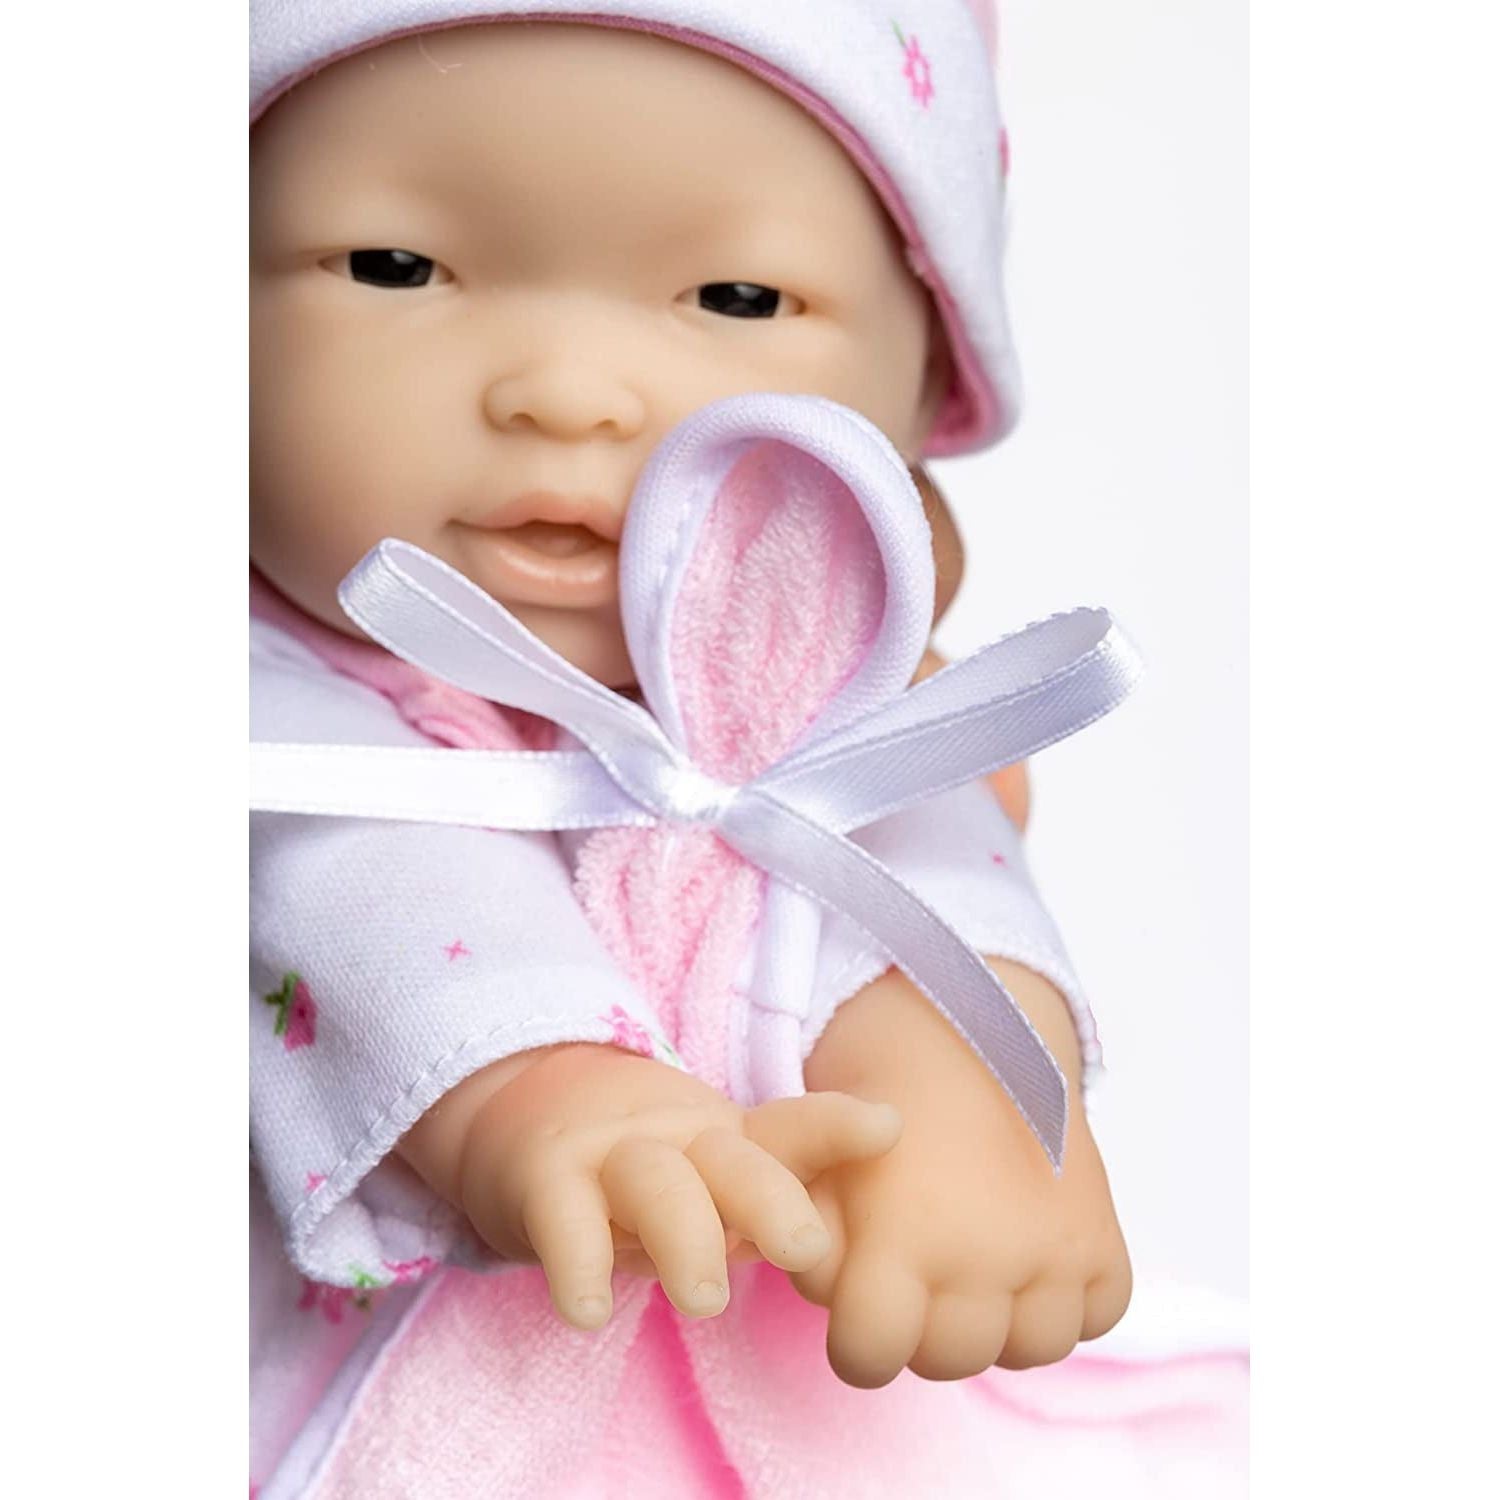 Berenguer 11" Asian La Baby Doll,Pink Asian